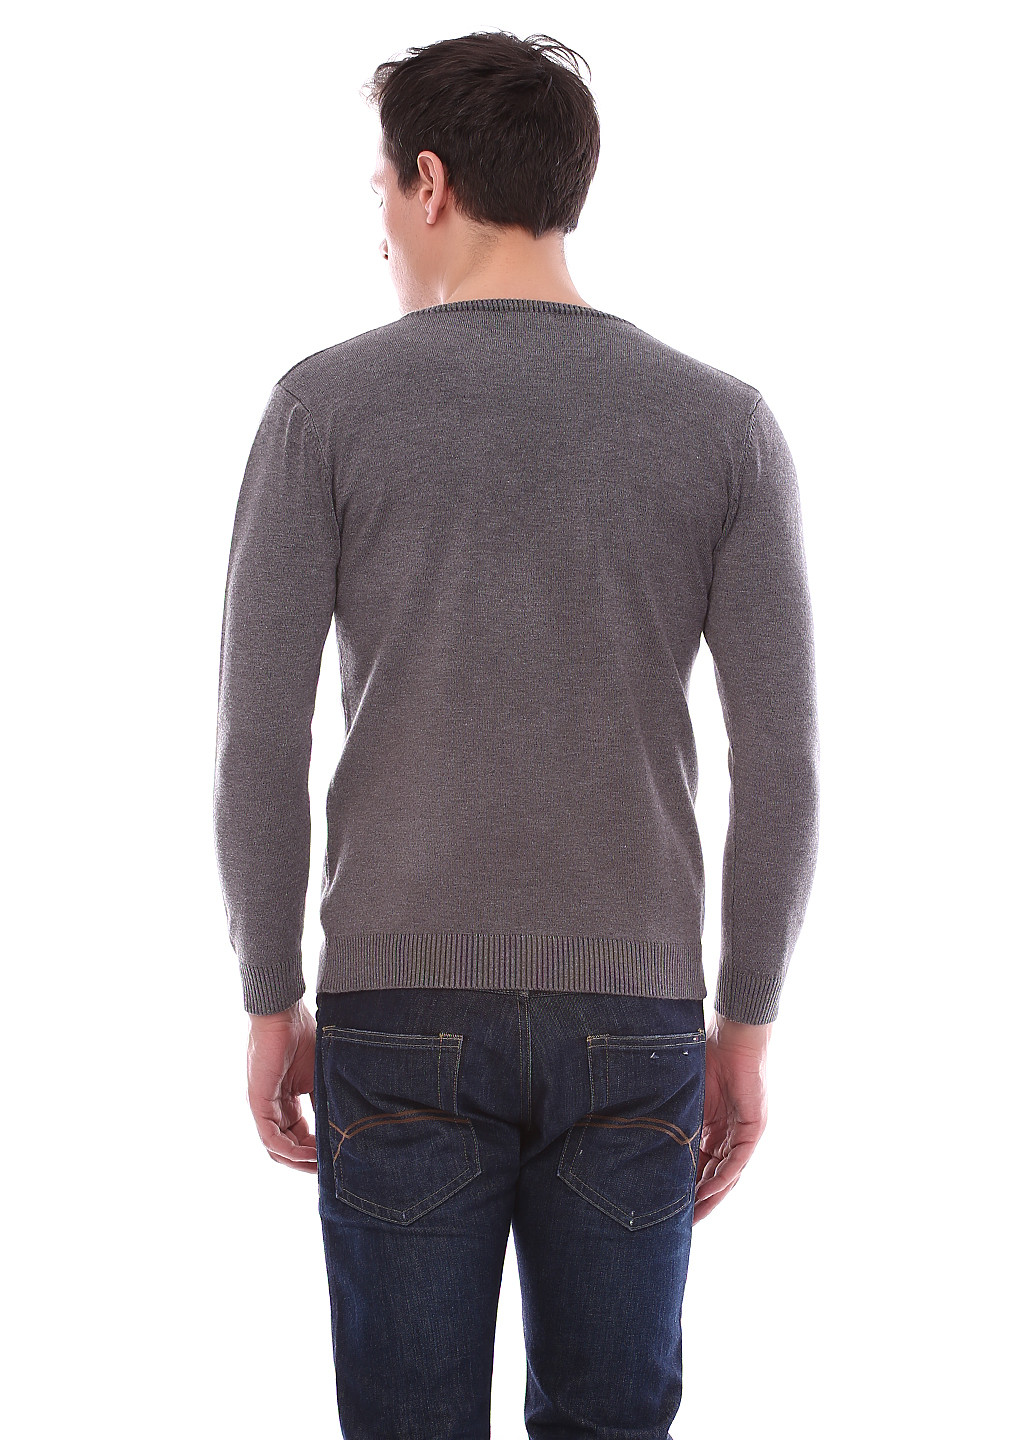 Серый демисезонный пуловер пуловер Tese